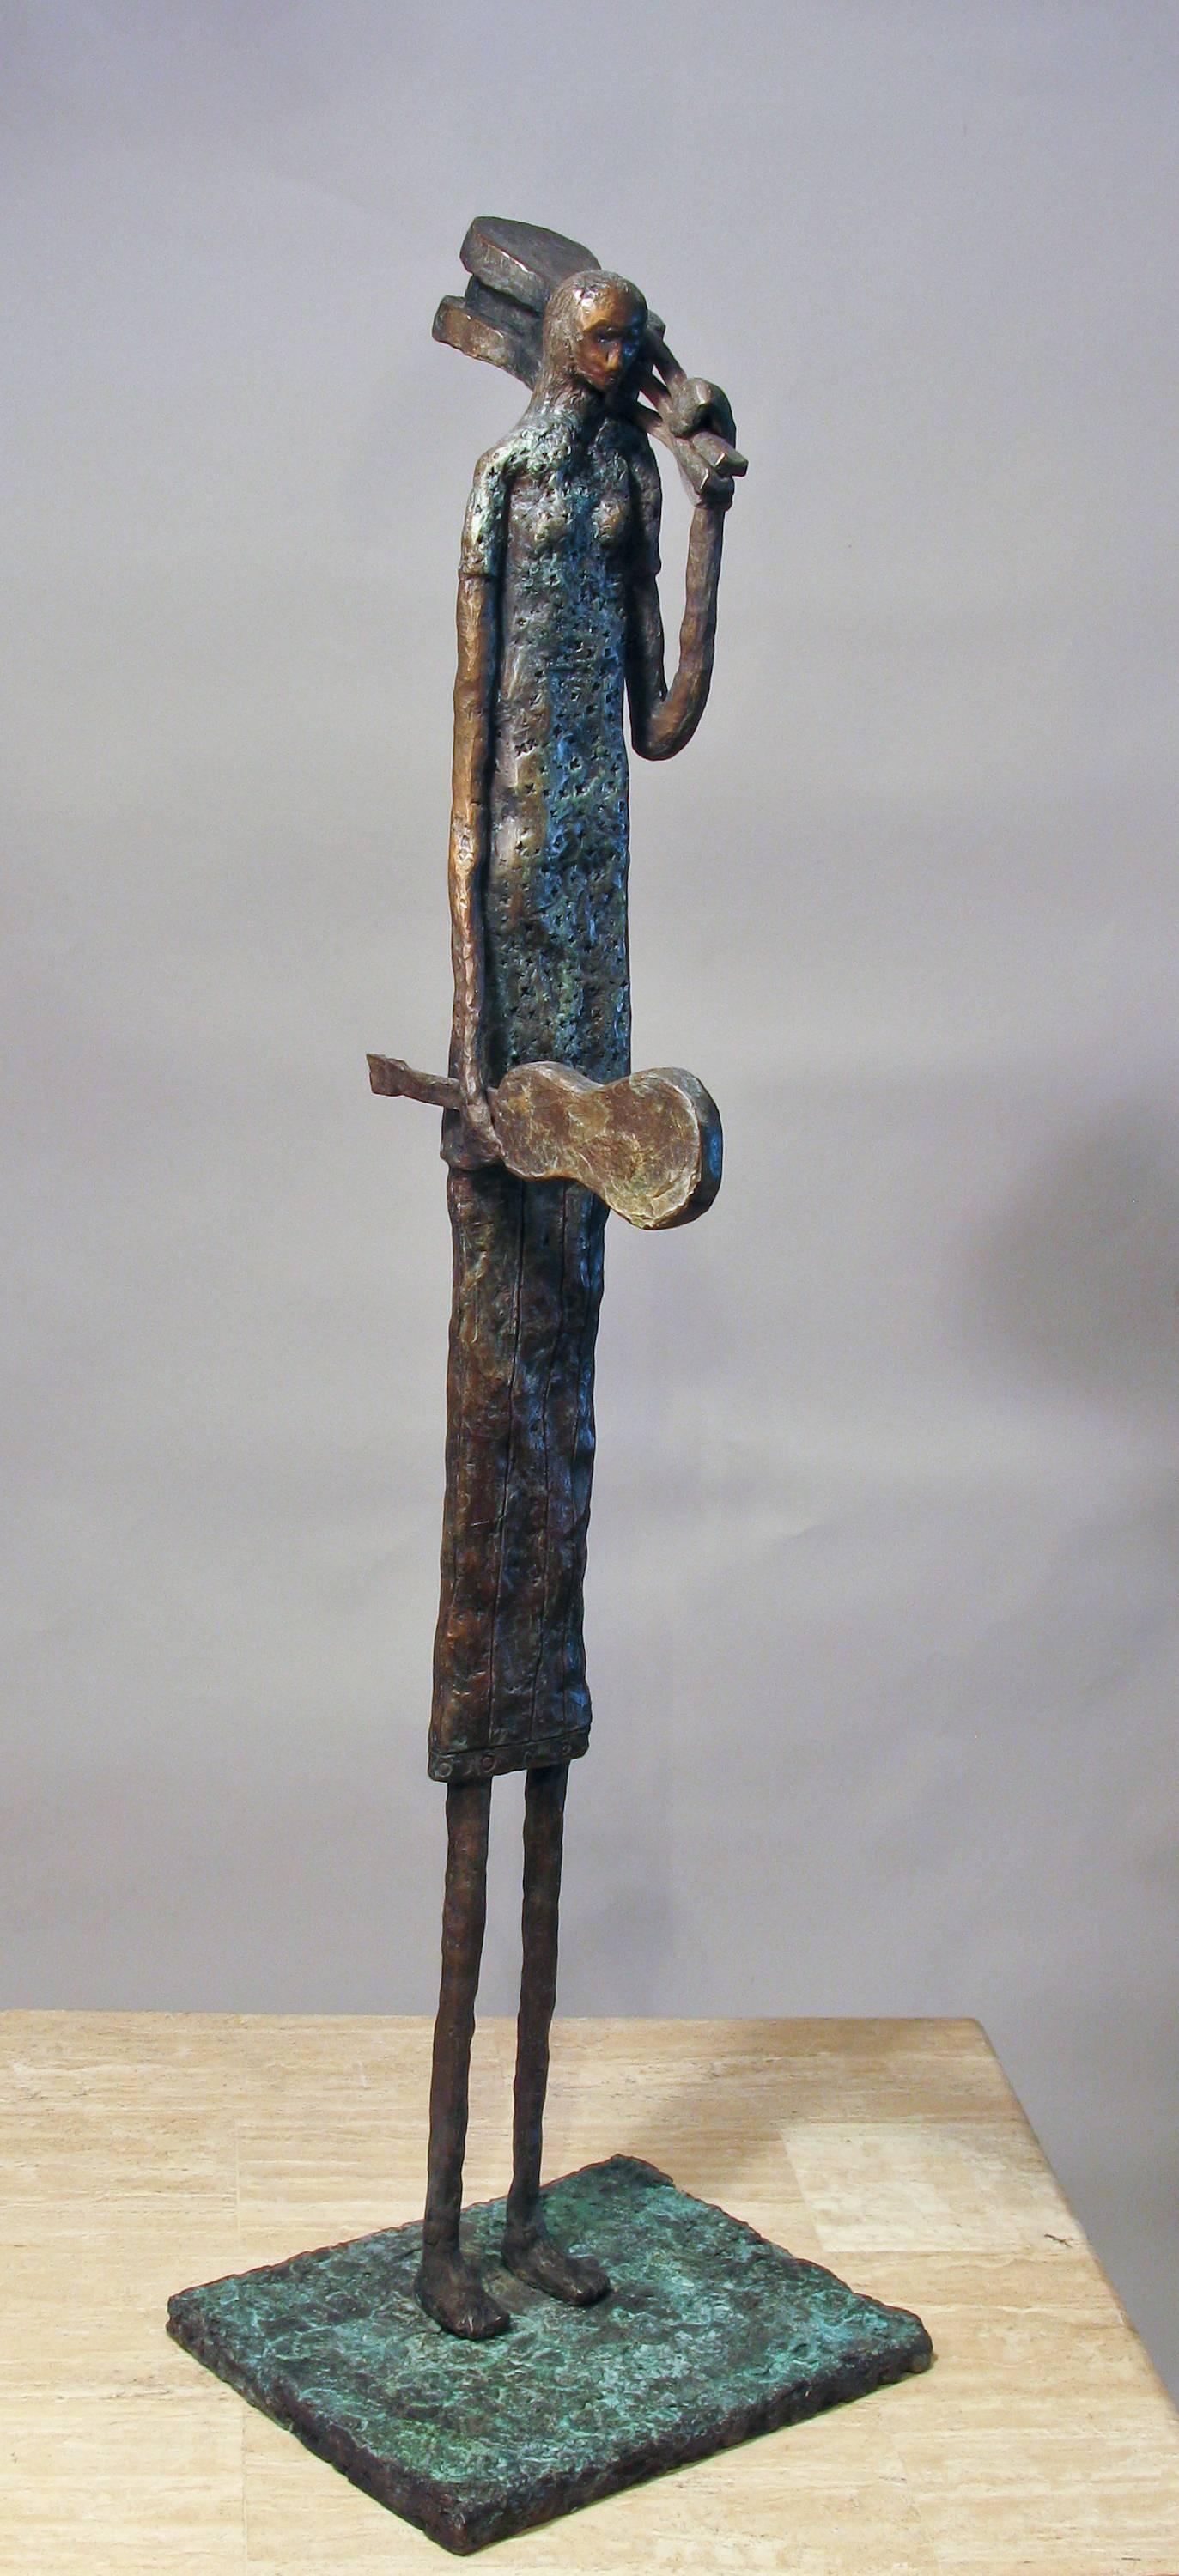 Guitarras, bronze sculpture, vertical, guitar seller, rustic, textured bronze - Sculpture by Eduardo Oropeza